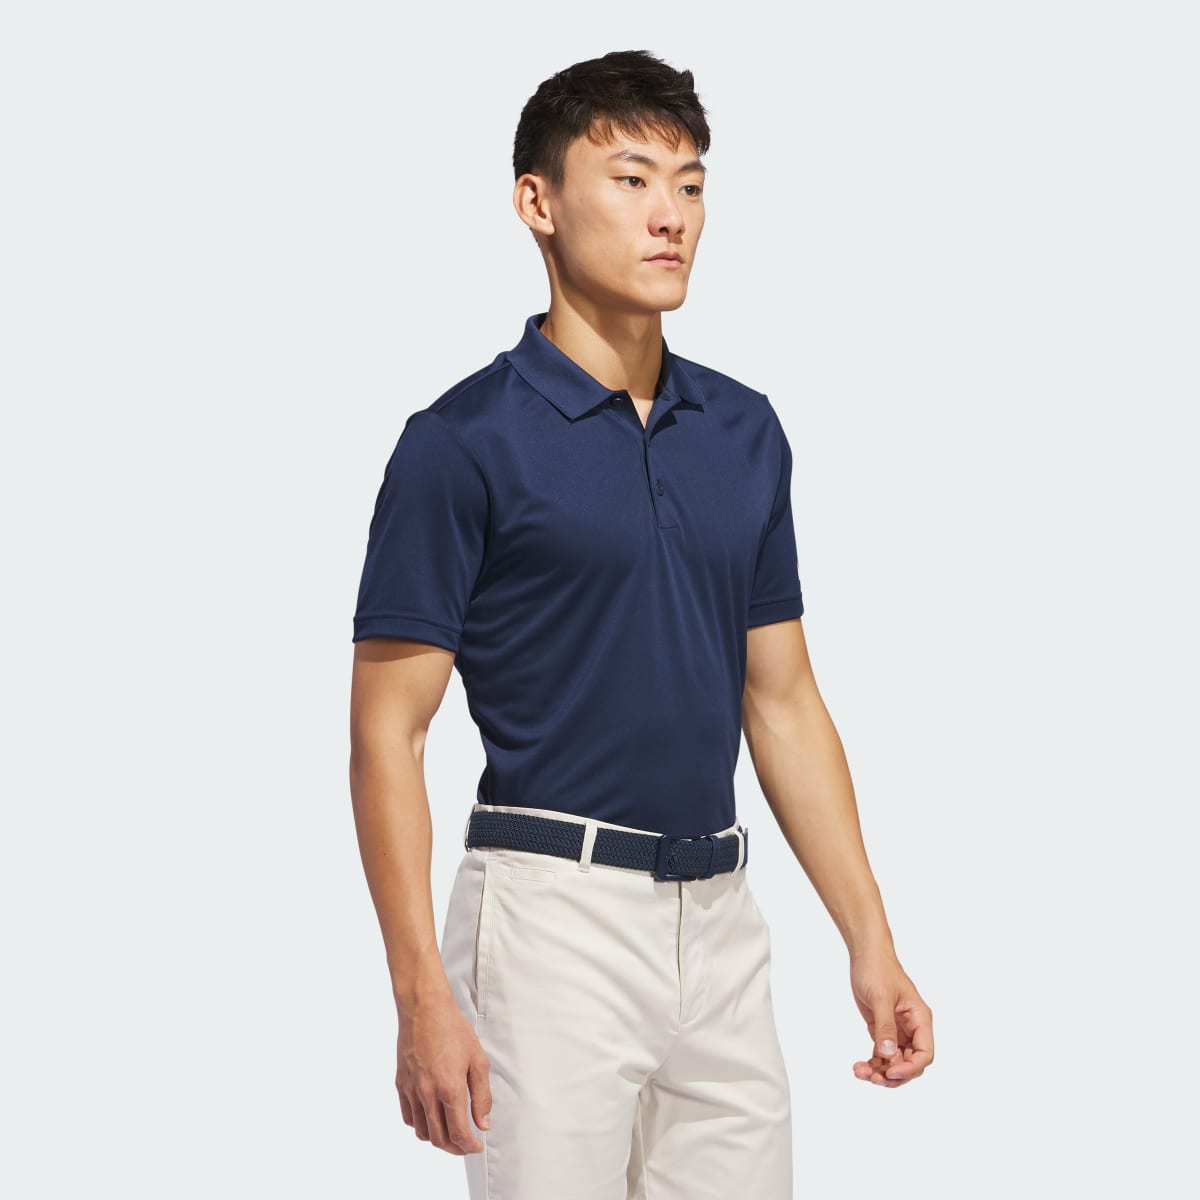 Adidas Core adidas Performance Primegreen Polo Shirt. 4